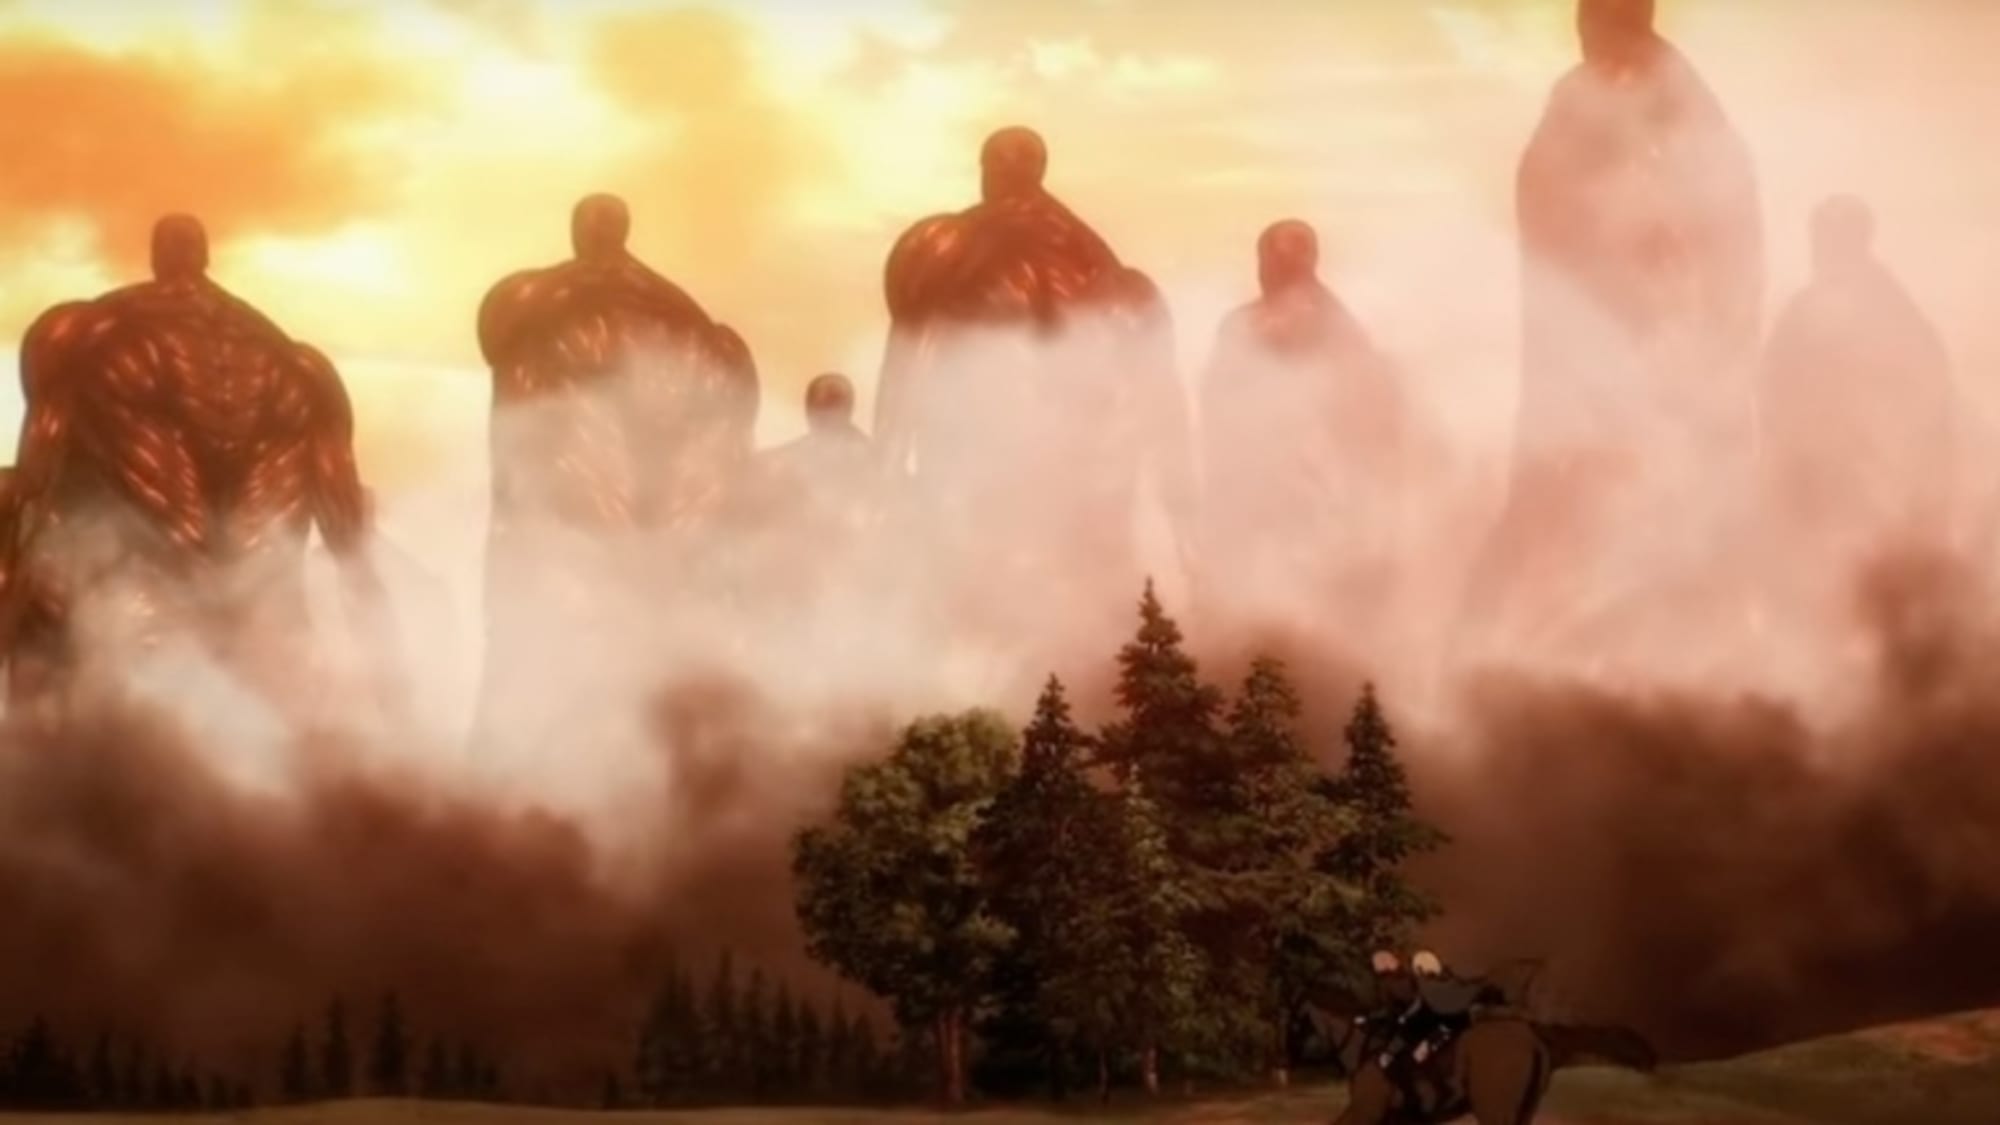 Attack on Titan's Final Season - Everything We Know So Far